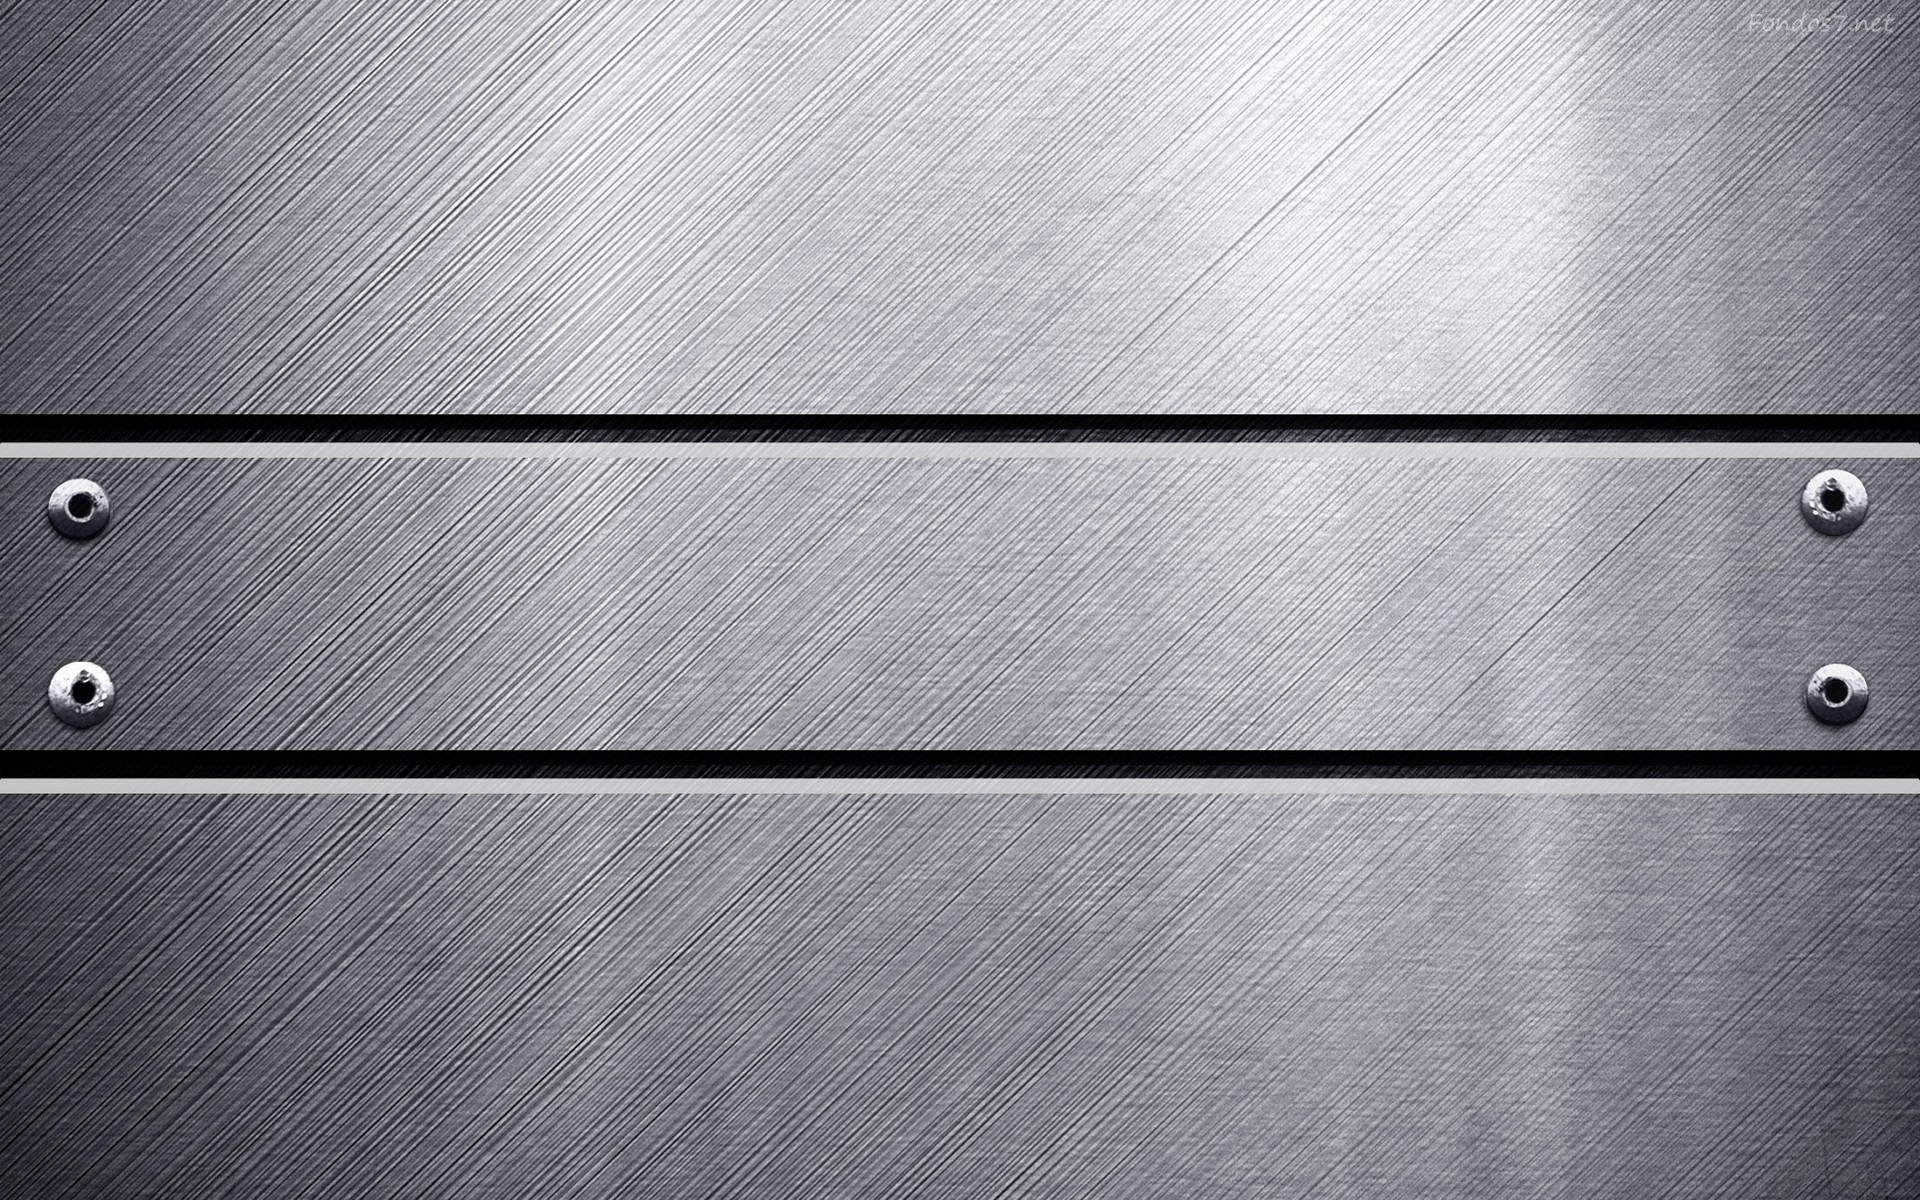 HD Metal Wallpaper Amp Metallic Background For